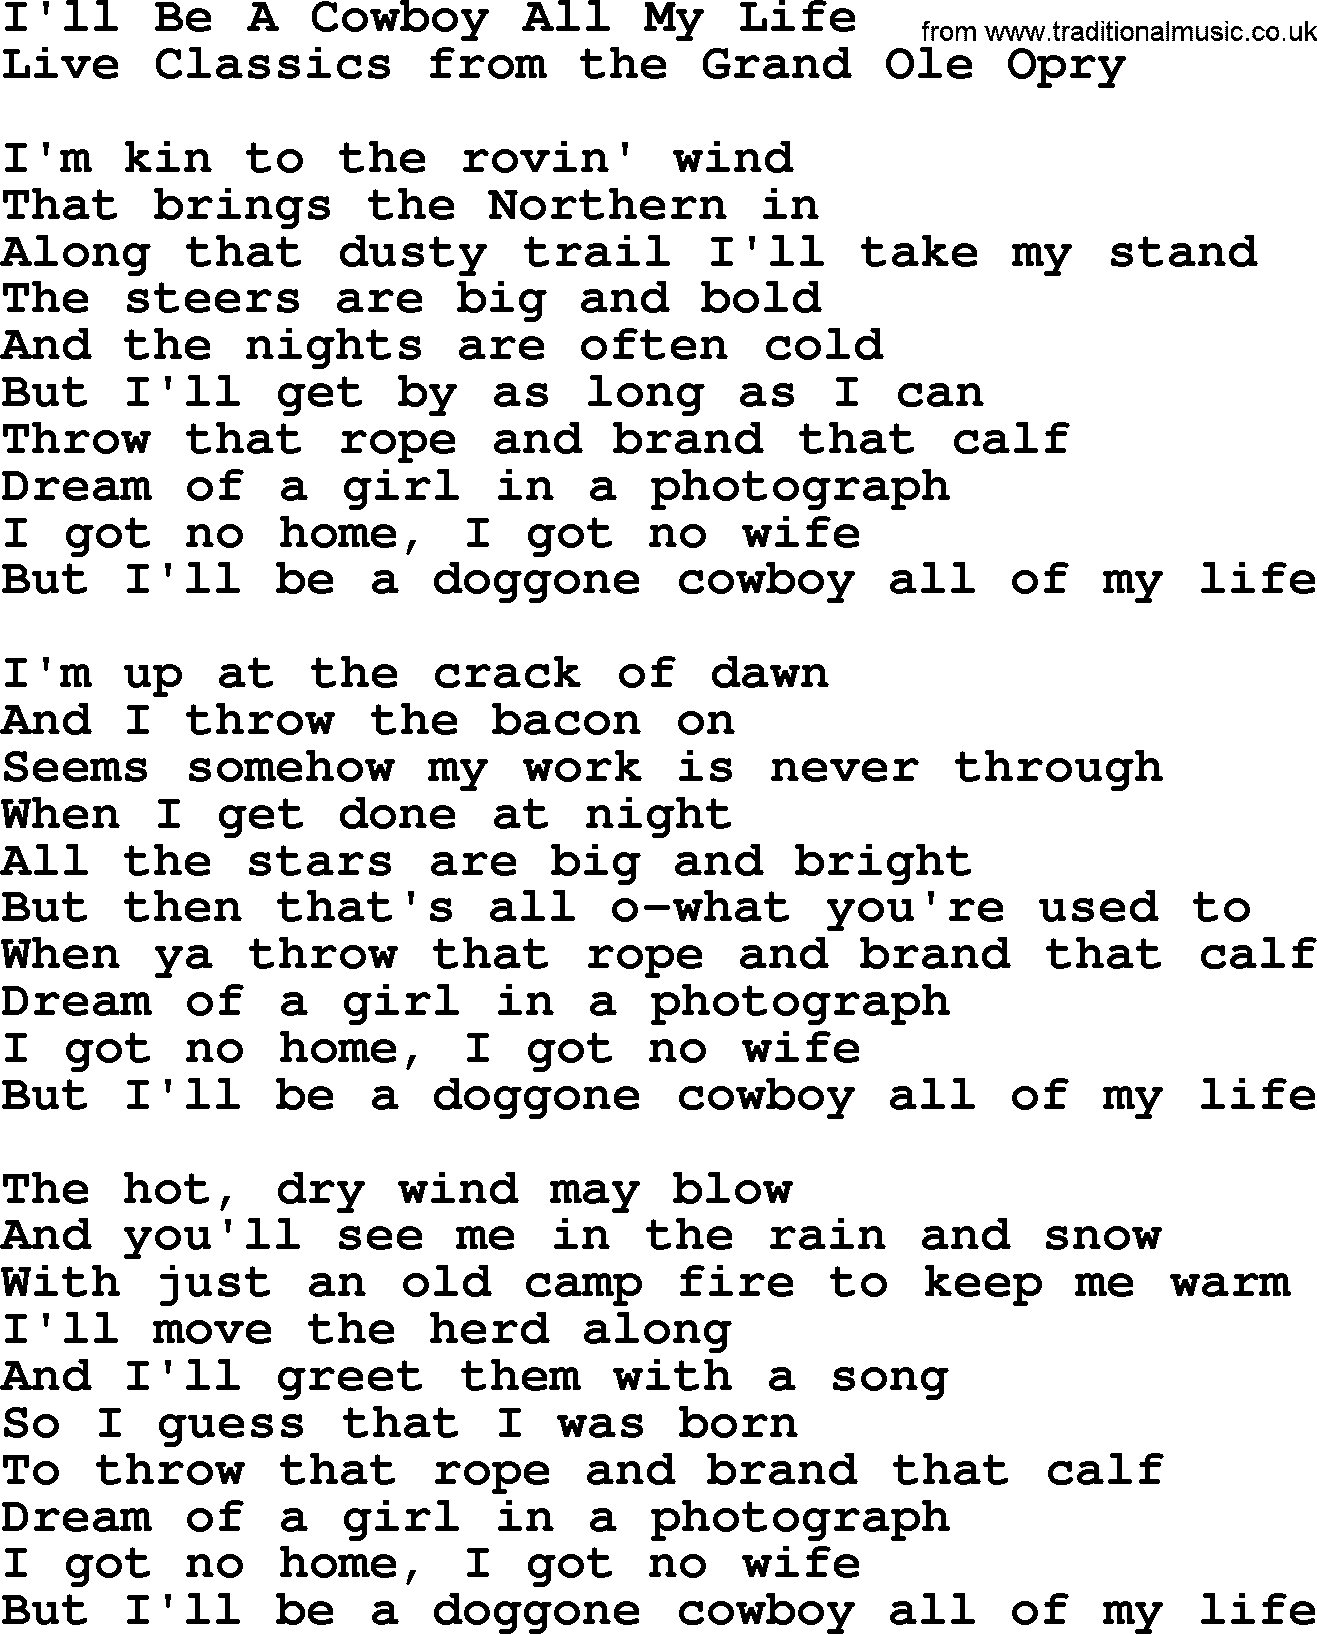 Marty Robbins song: I'll Be A Cowboy All My Life, lyrics